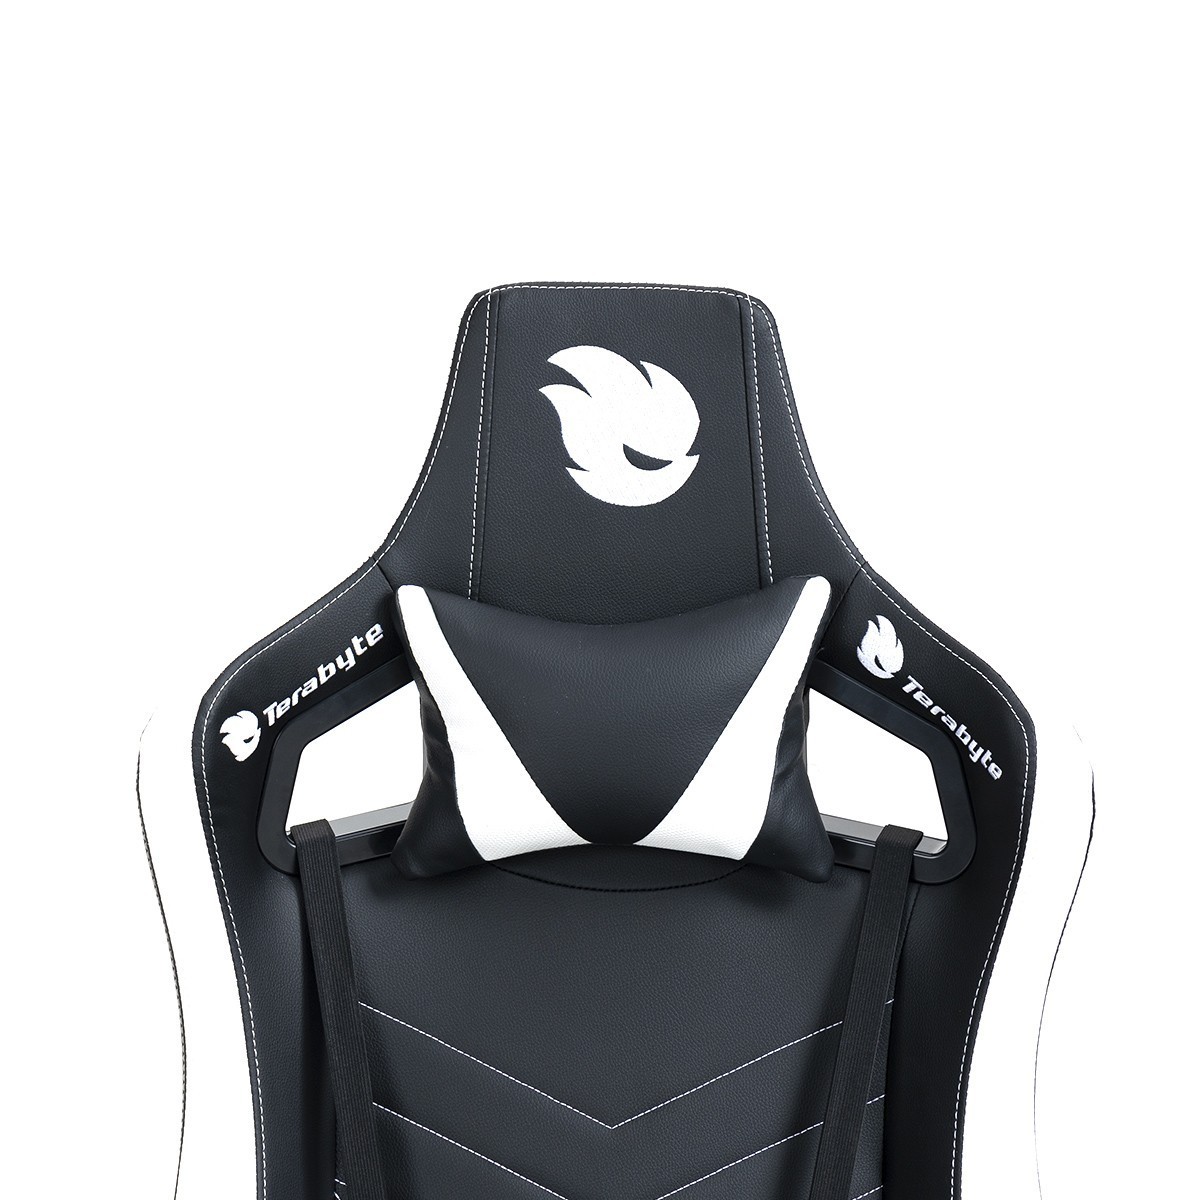 Cadeira Gamer Terabyte Black Throne, Reclinável, 4D, Preto e Branco